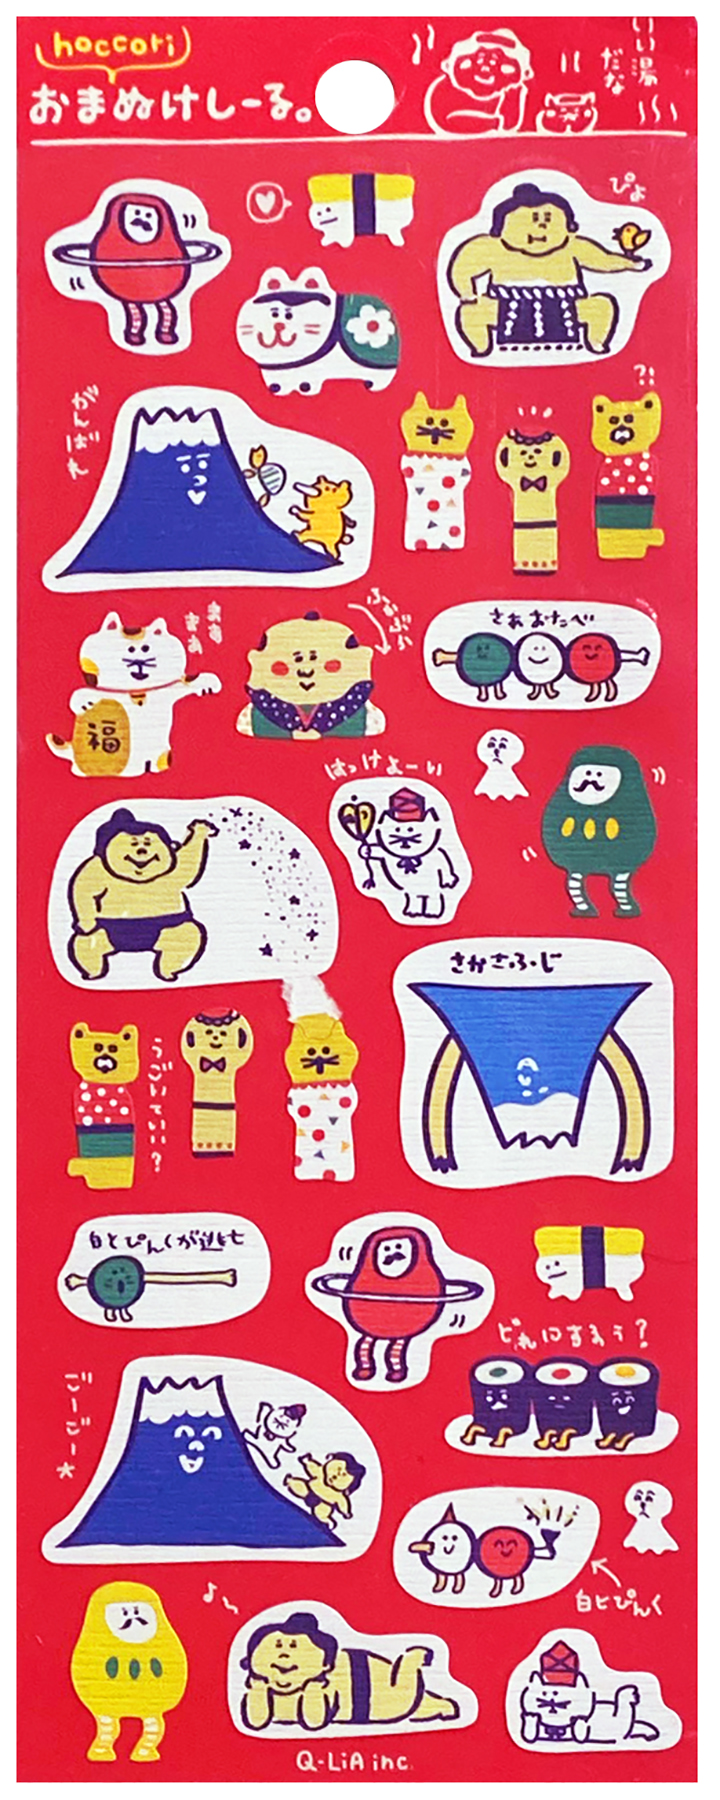 Q-Lia Textured Paper Die-Cut Sticker Sheet: Japan Life